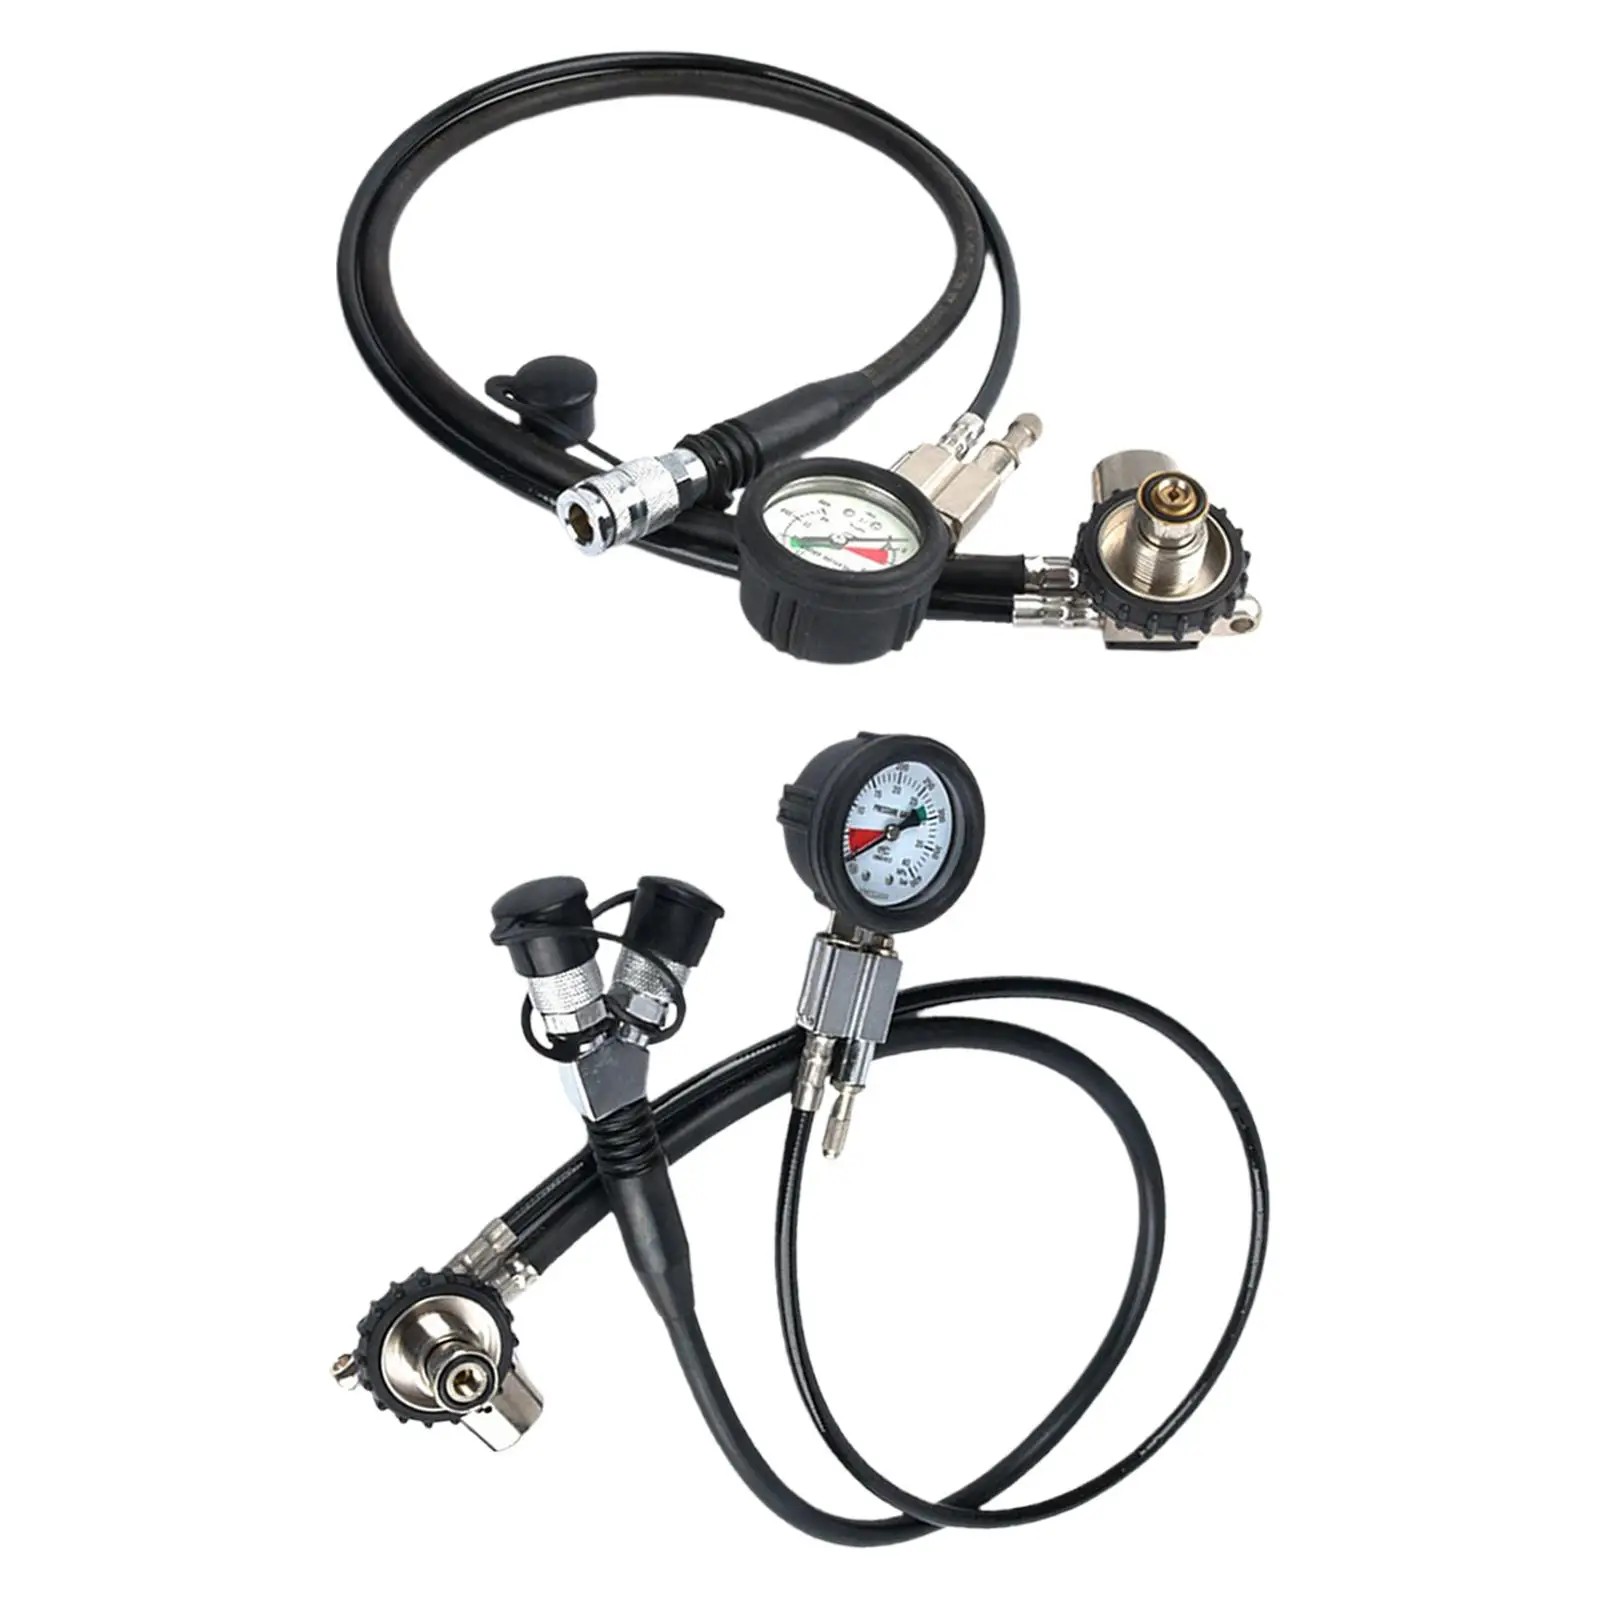 Professional Scuba Diving Regulator Hose for Air Respirator BCD Connector Hose Air Pressure Gauge Pressure Reducer Assembly